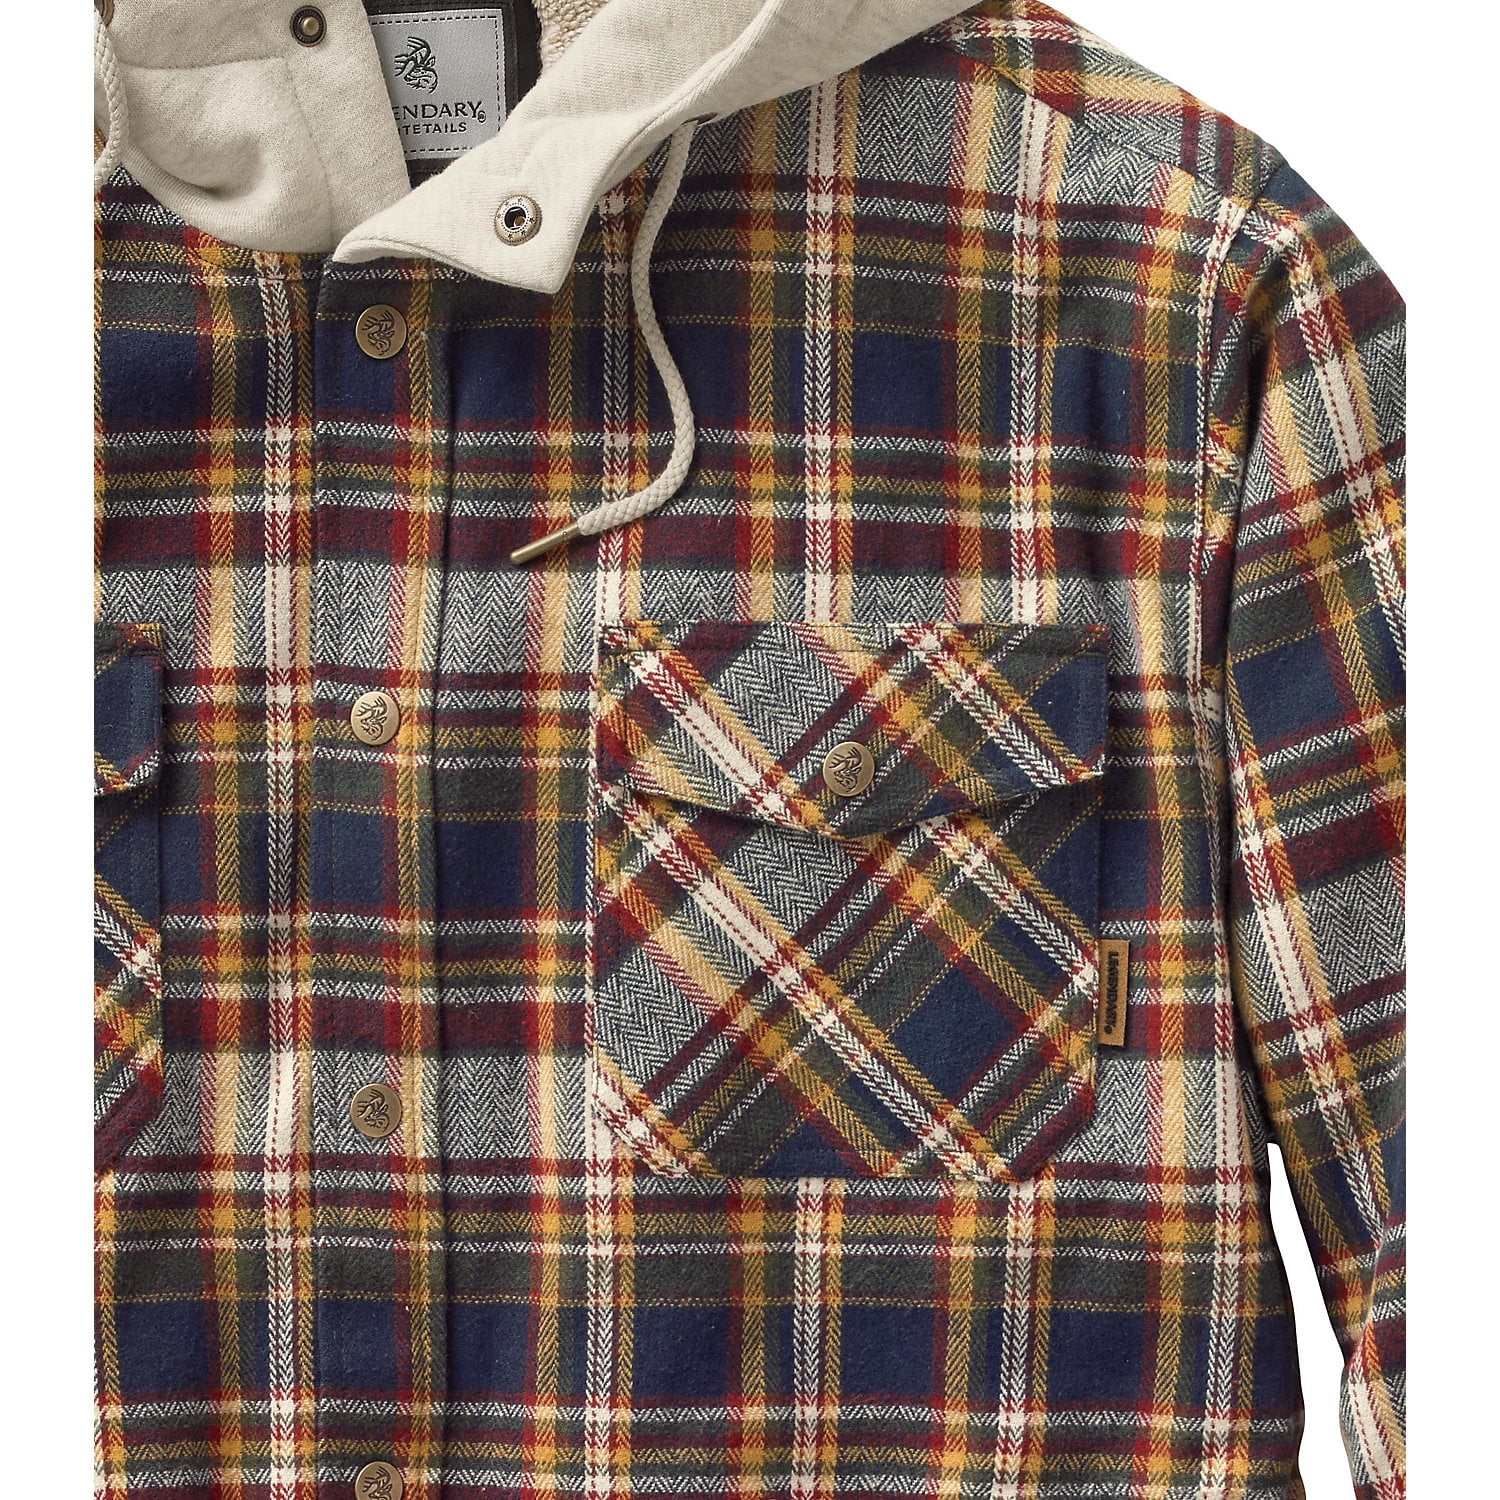 legendary whitetails men's camp night berber lined hooded flannel shirt jacket